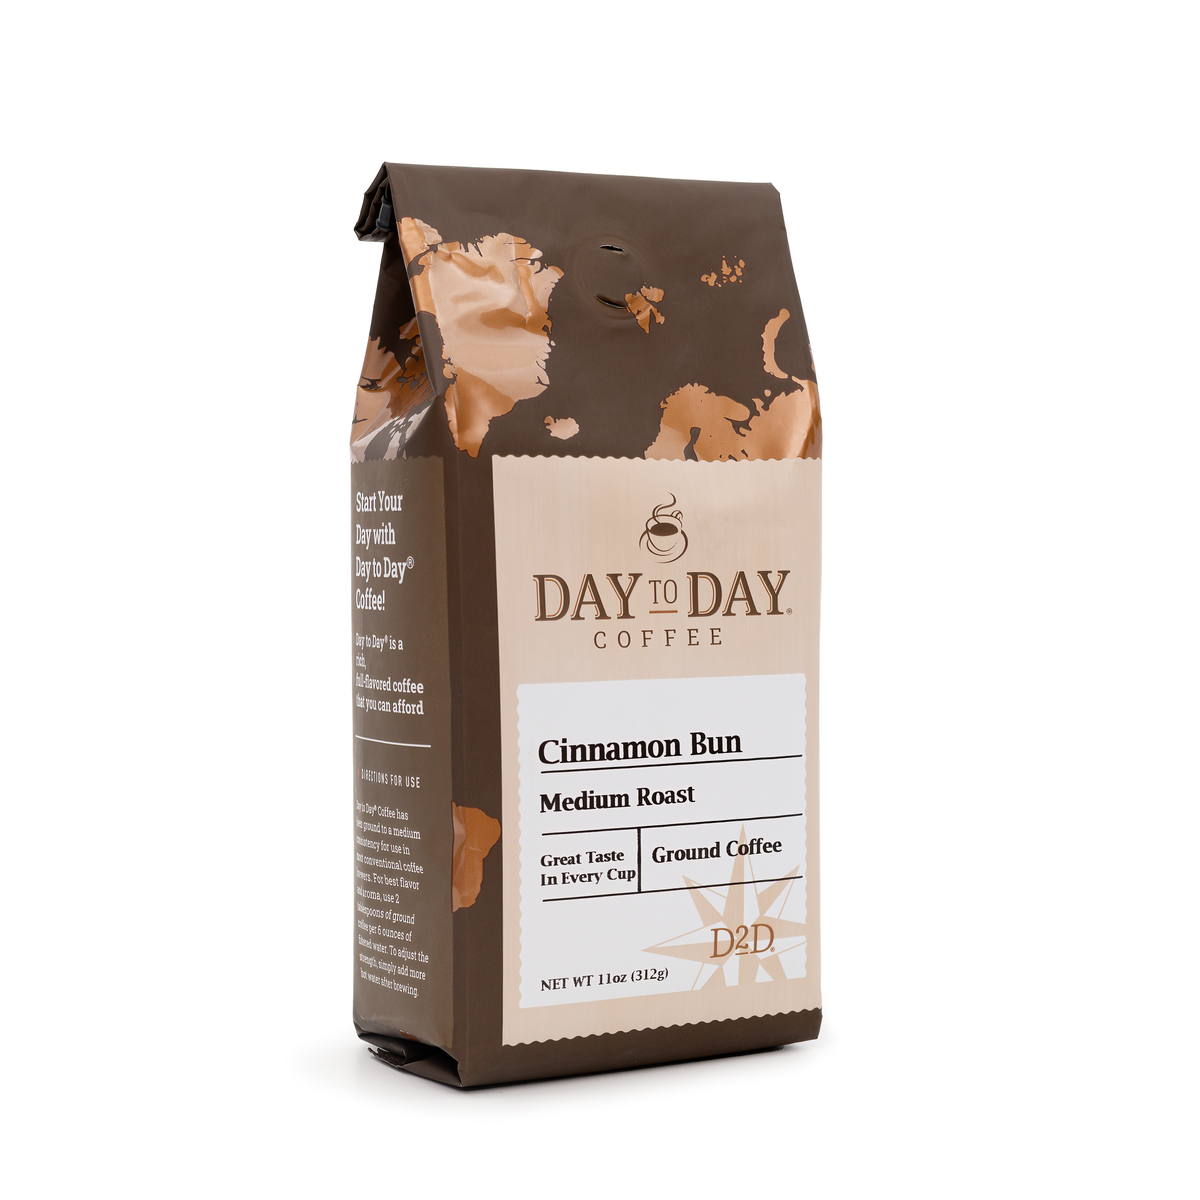 Day to day coffee 11oz cinnamon bun medium roast ground coffee - 2